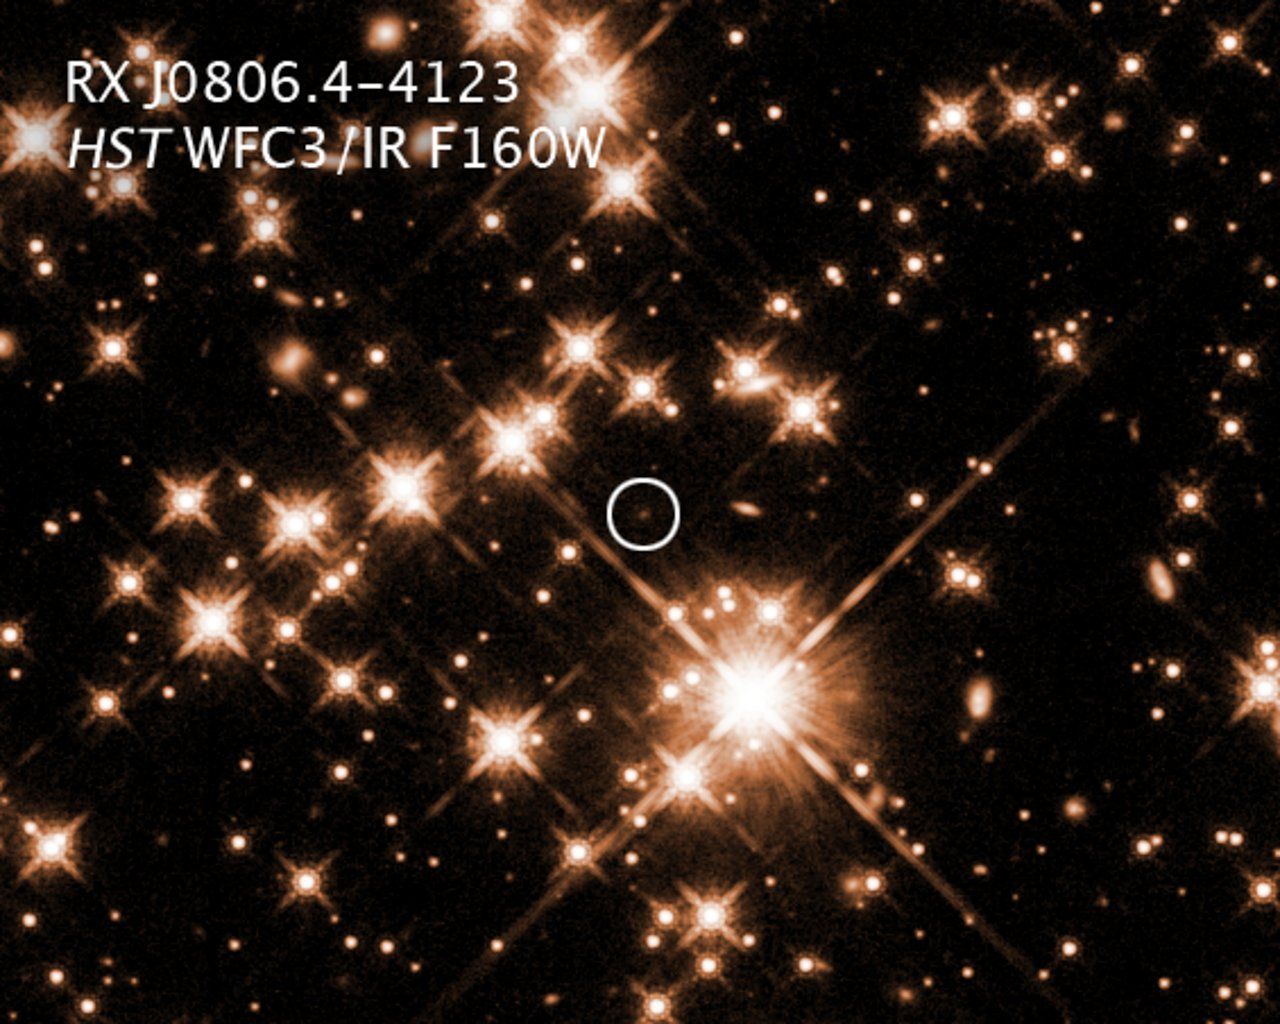 Hubble Sees An Unusual Neutron Star